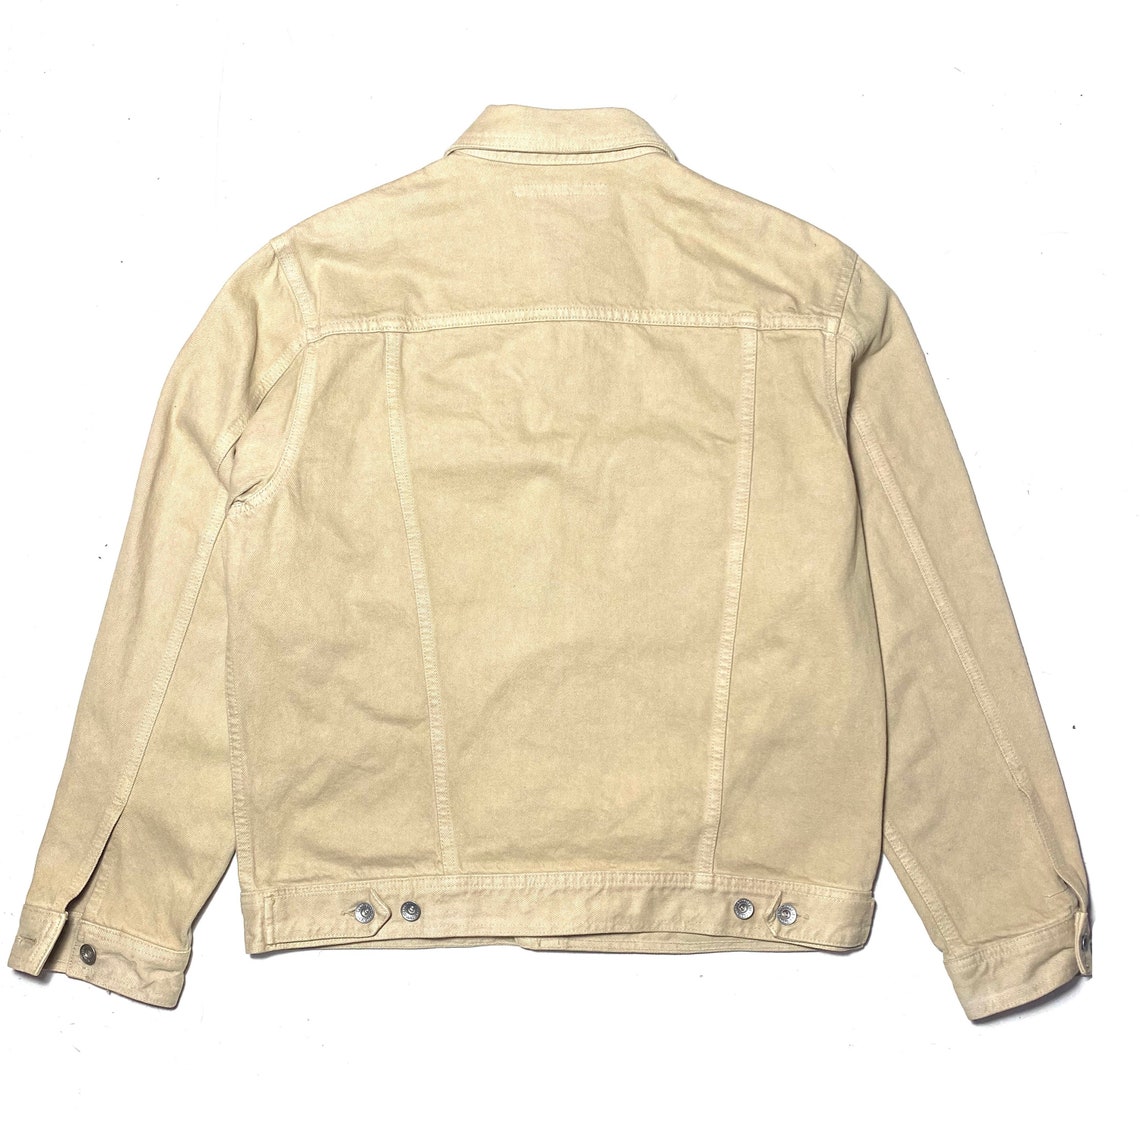 DKNY 90s beige denim trucker jacket made in USA cool workwear | Etsy